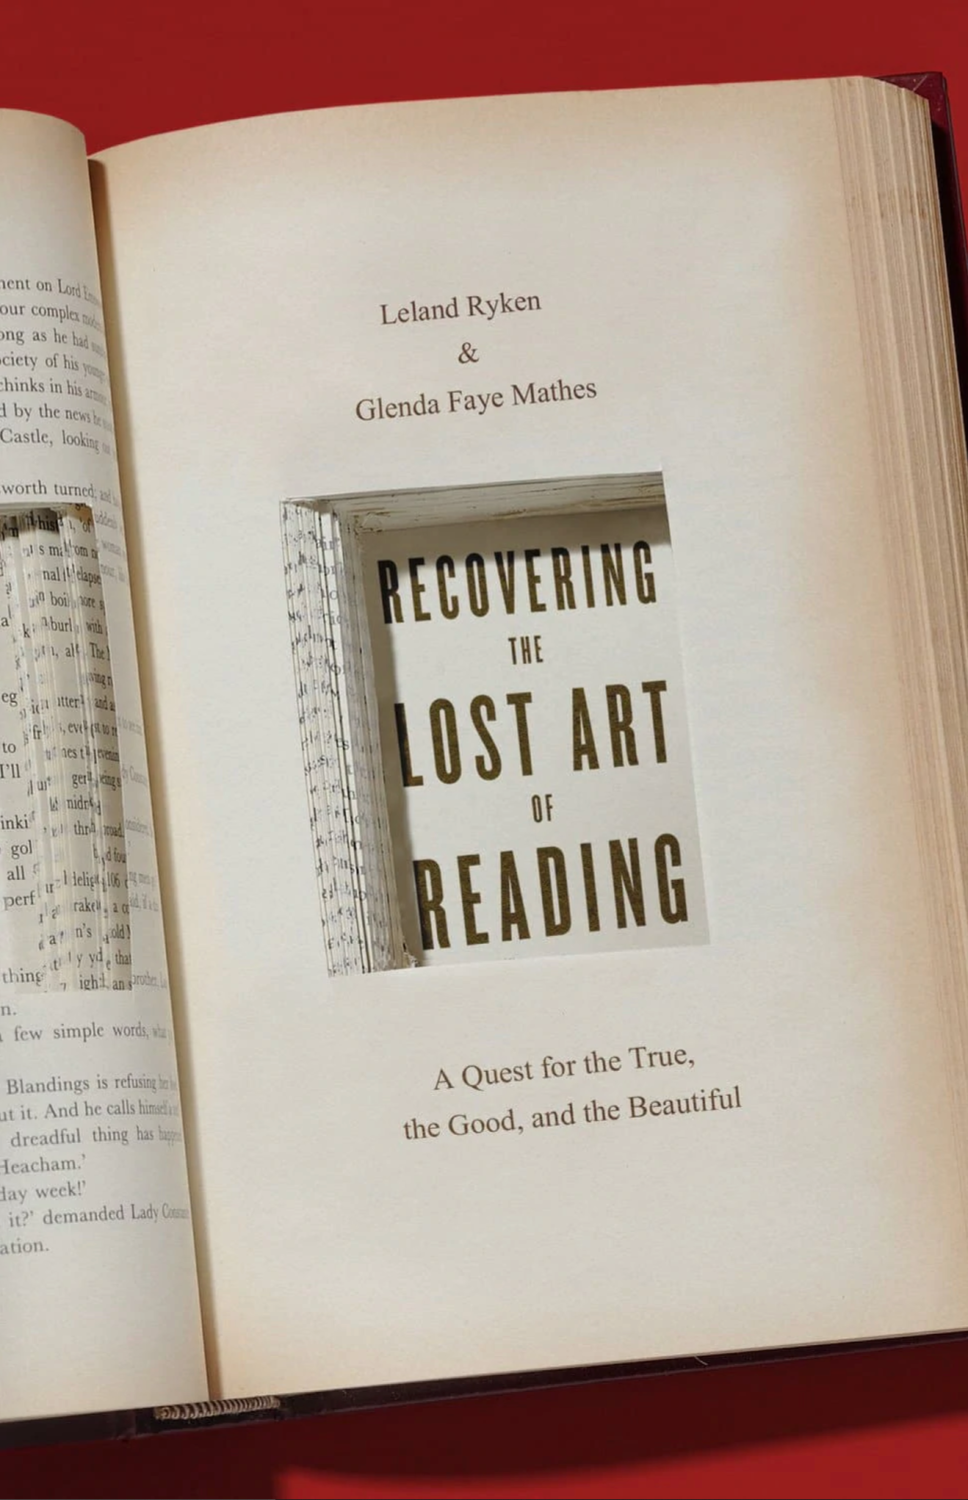 Lost Art Of Reading